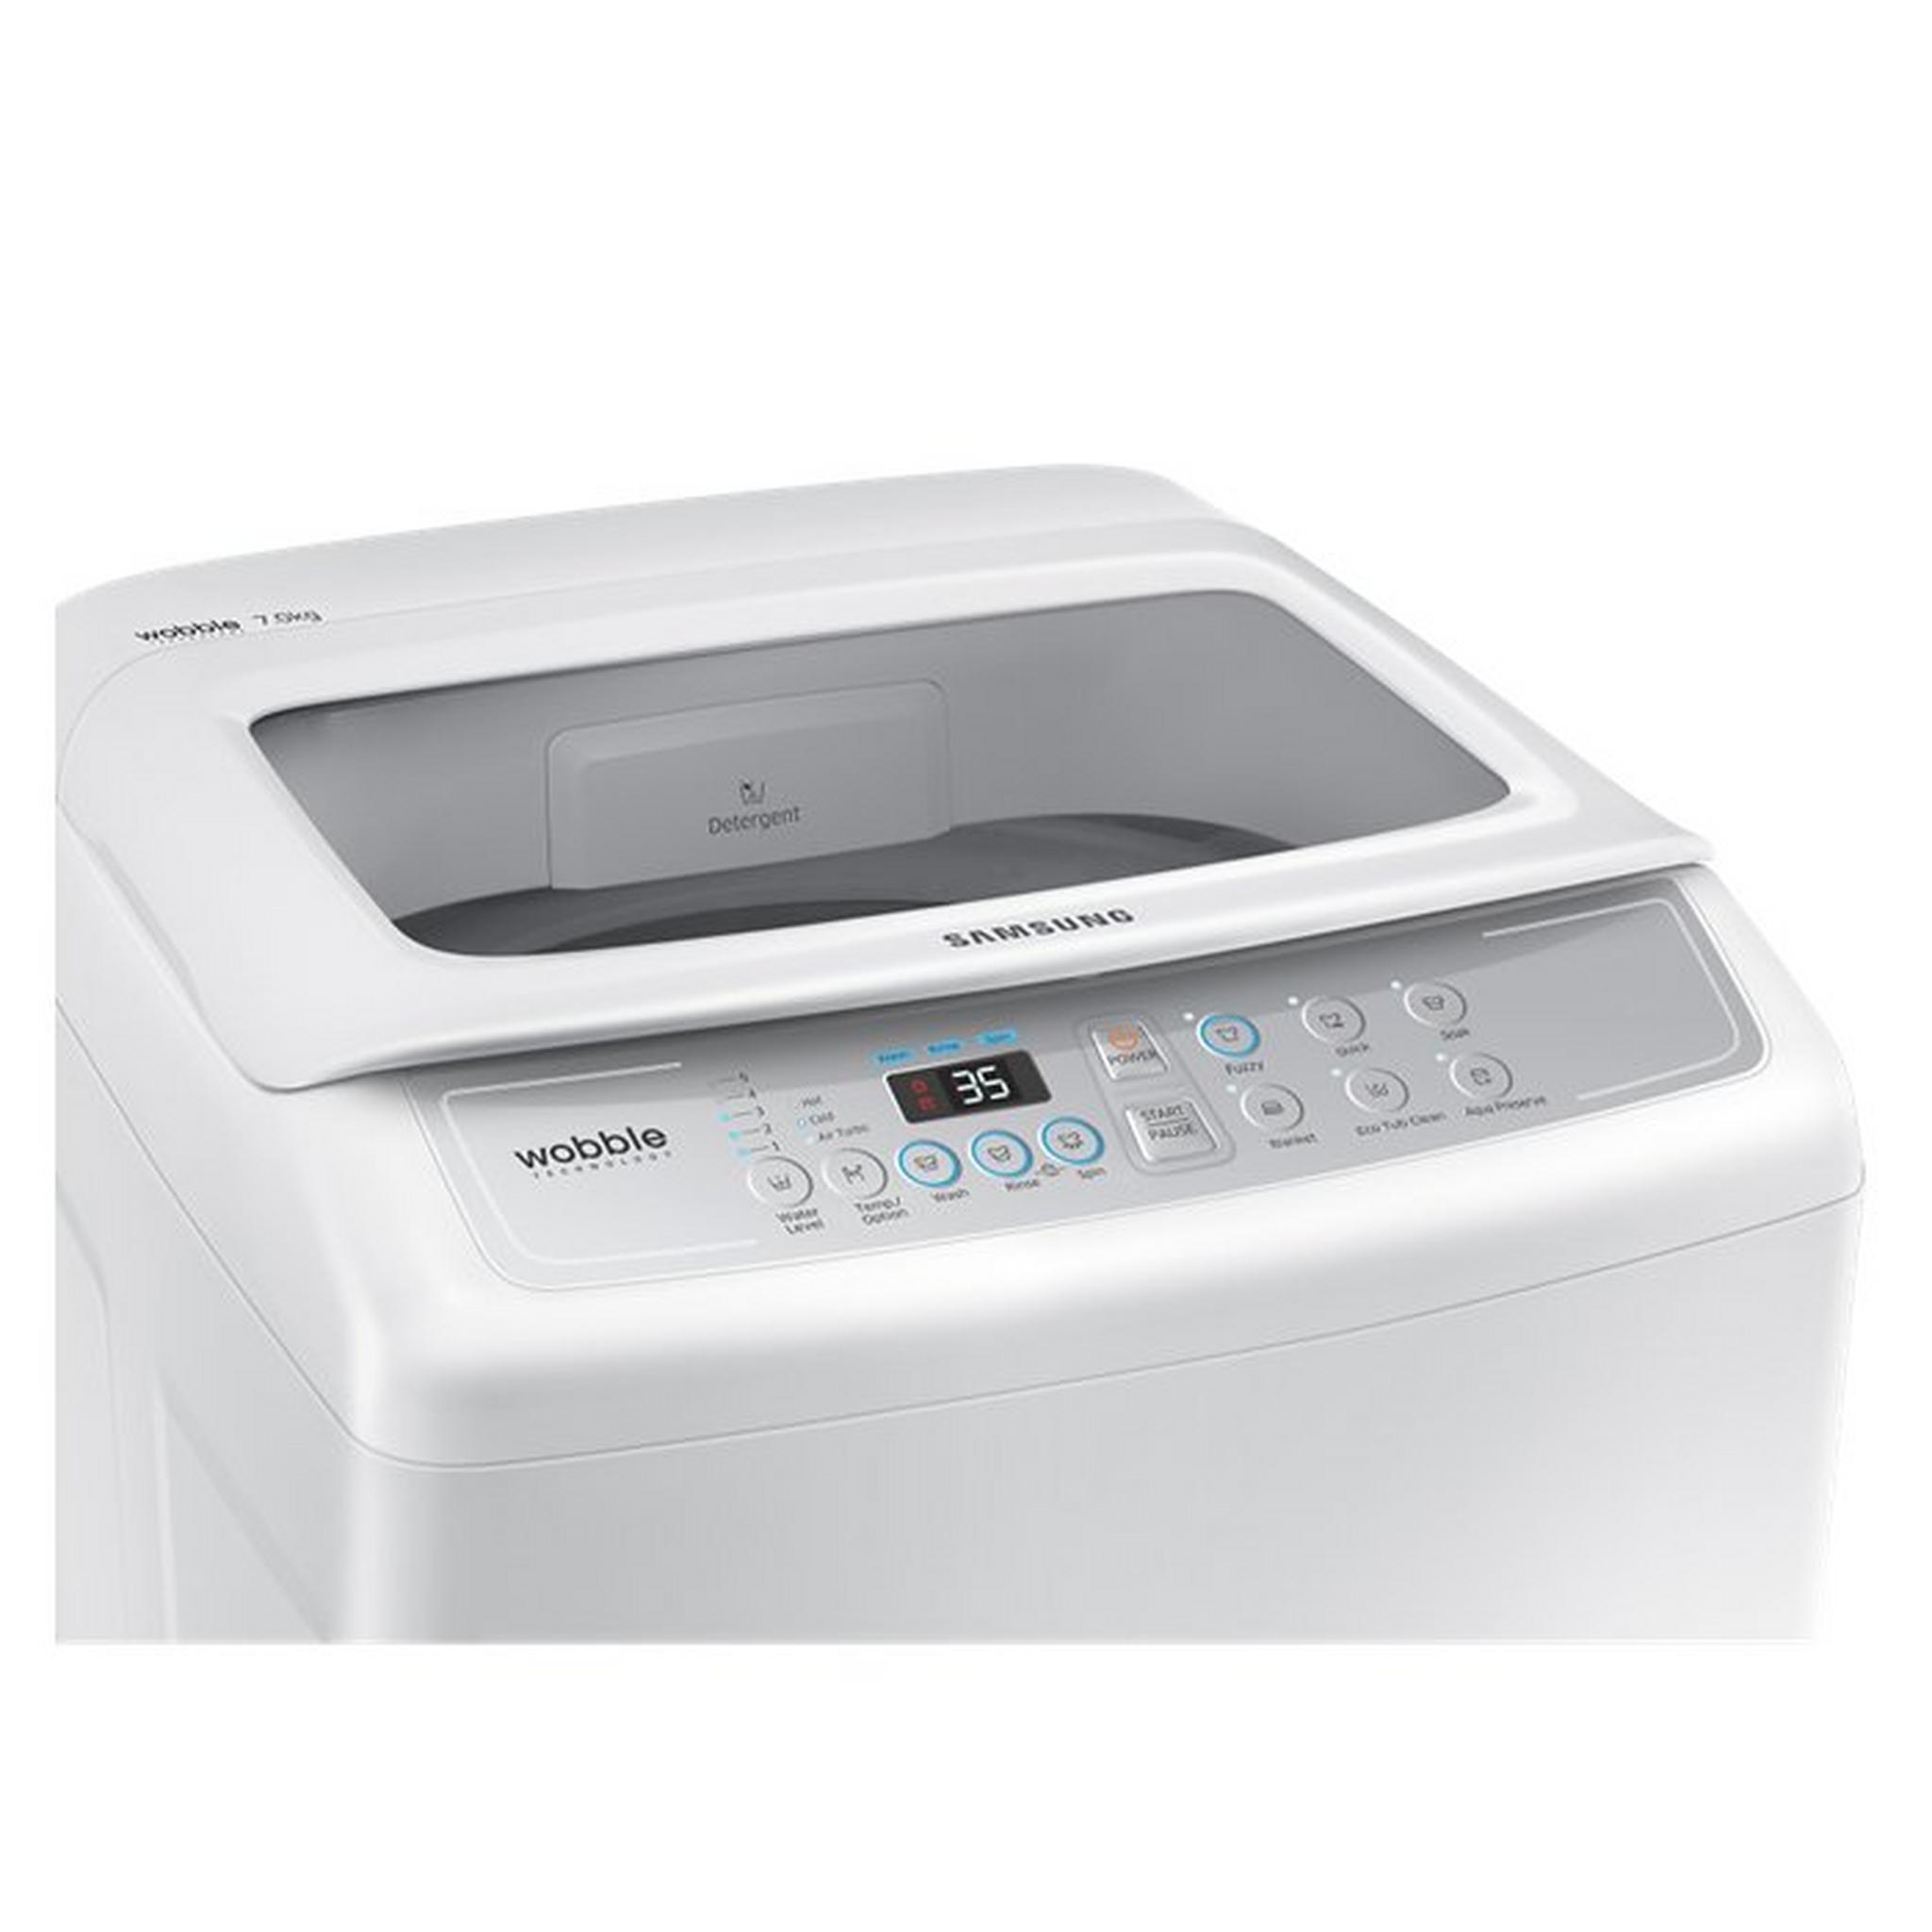 Samsung 7 Kg Top Load Washing Machine, WA70H4200SW – White